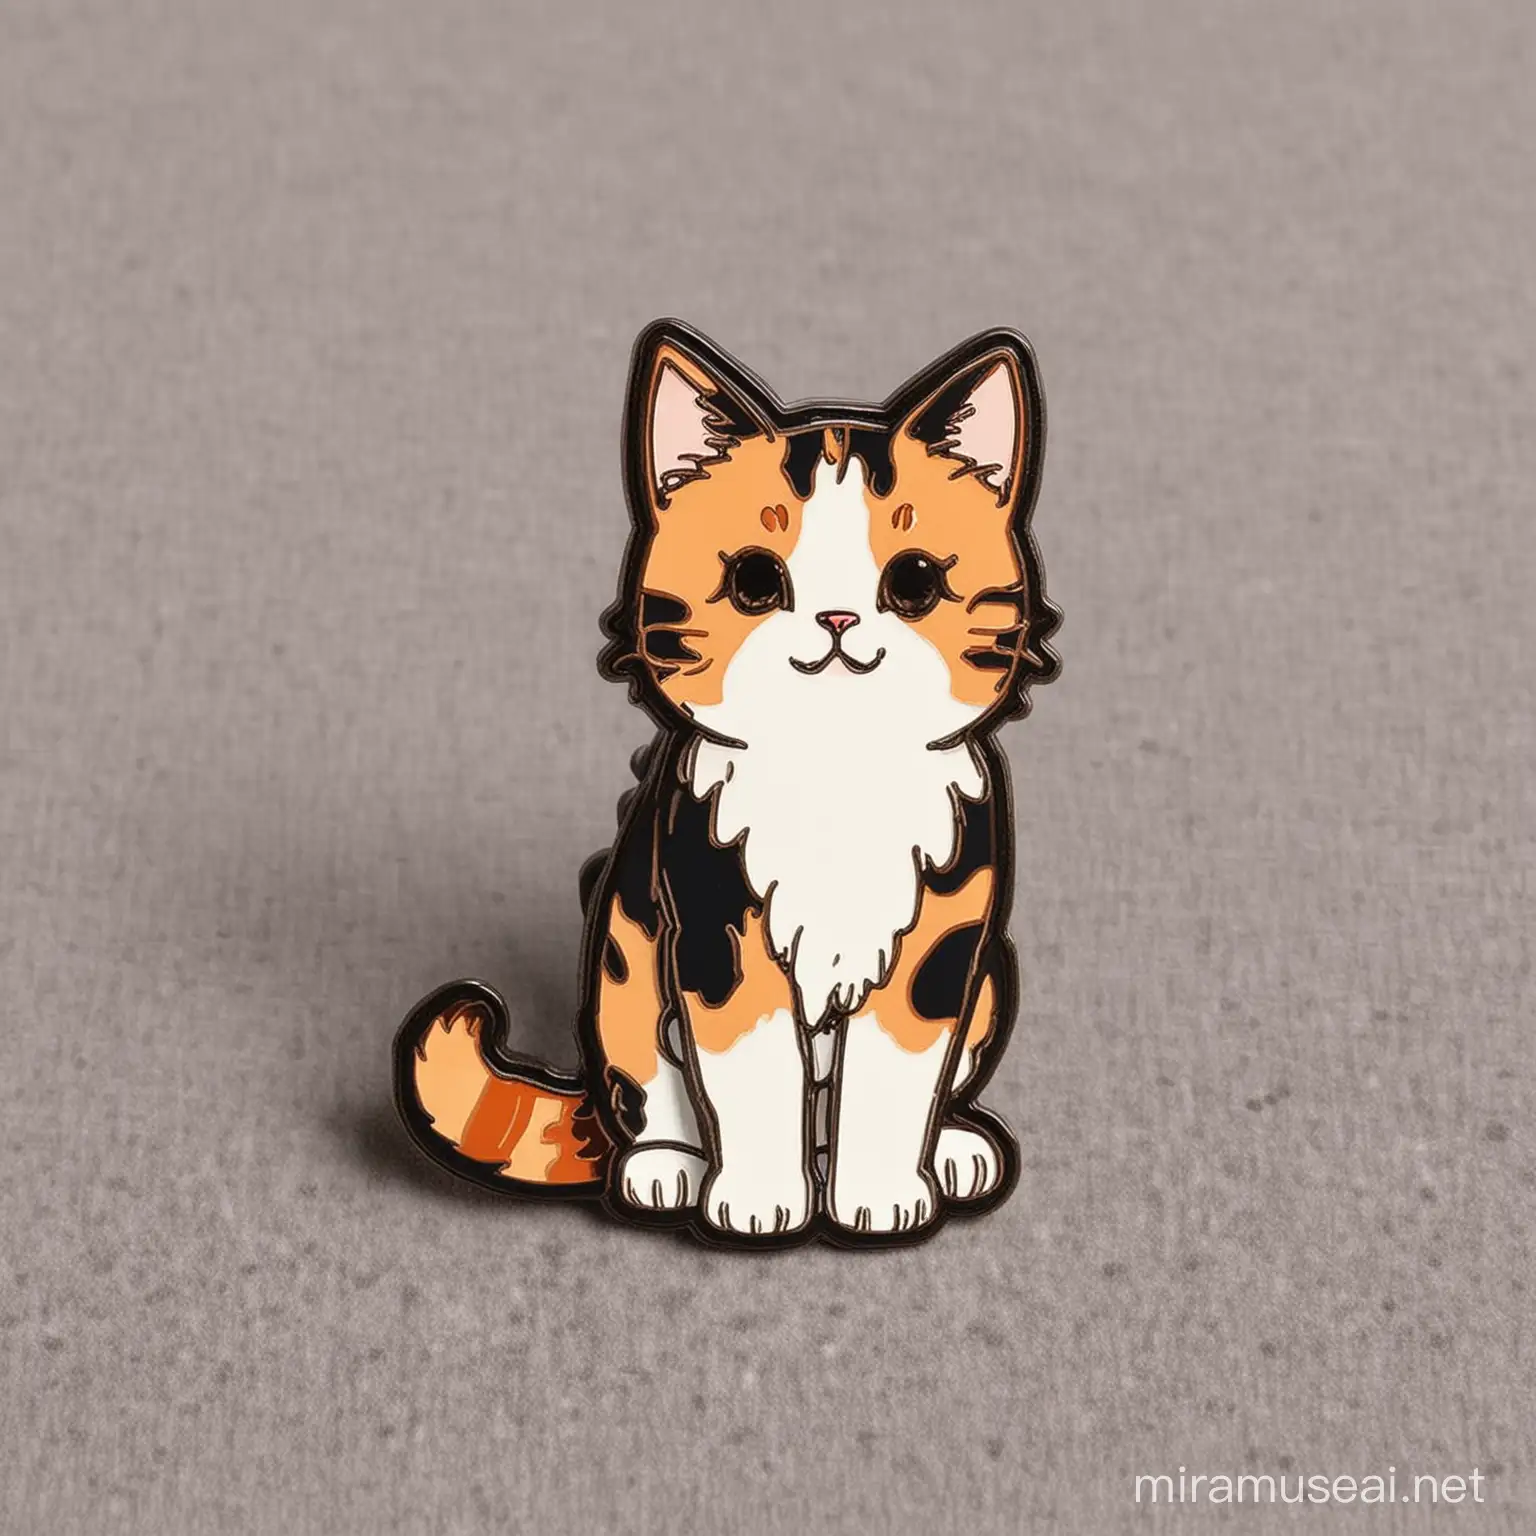 Adorable Calico Cat Enamel Pin Playful Feline Design for All Ages